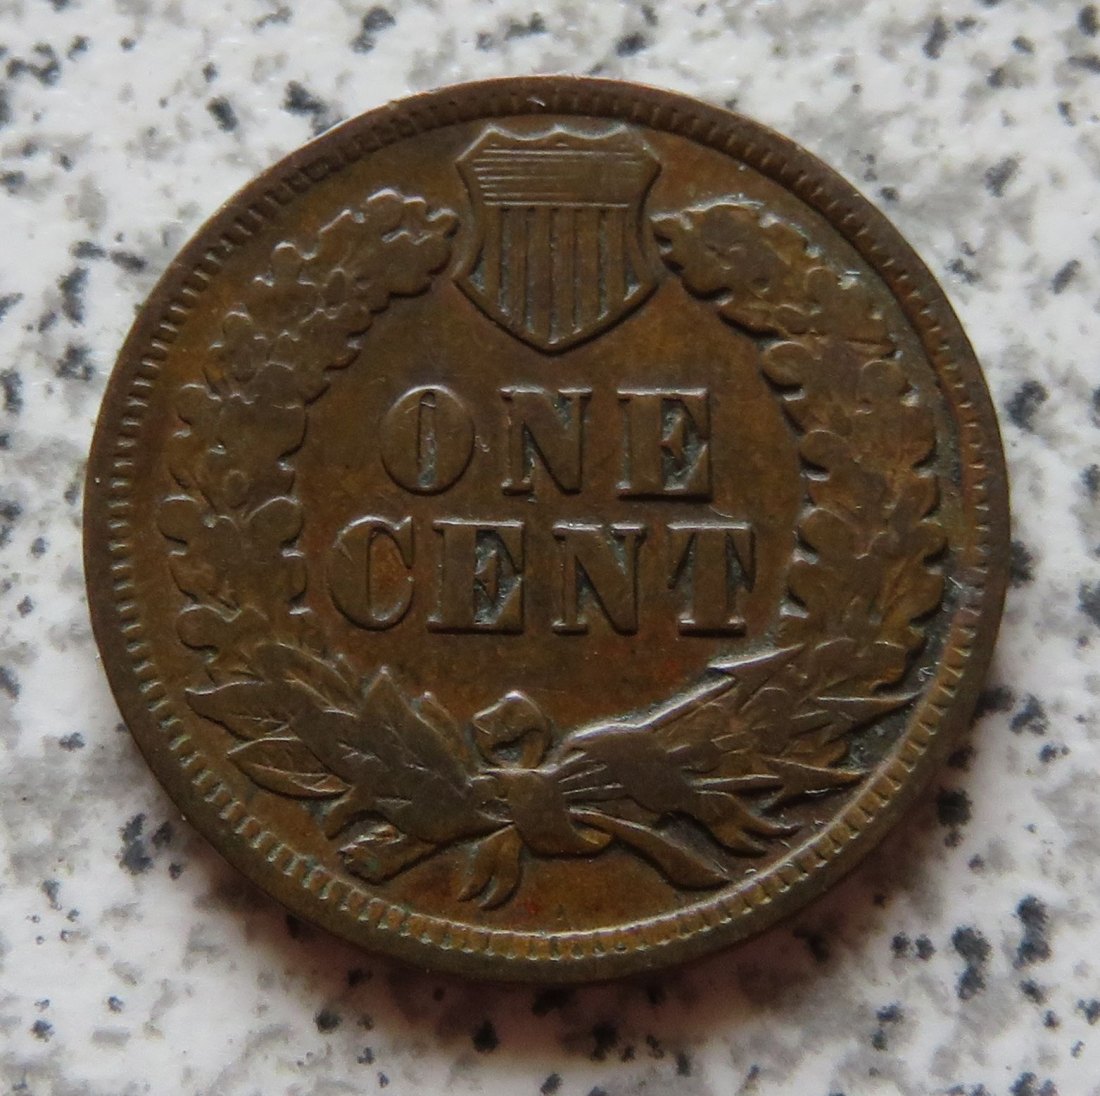  USA Indian Head Cent 1902   